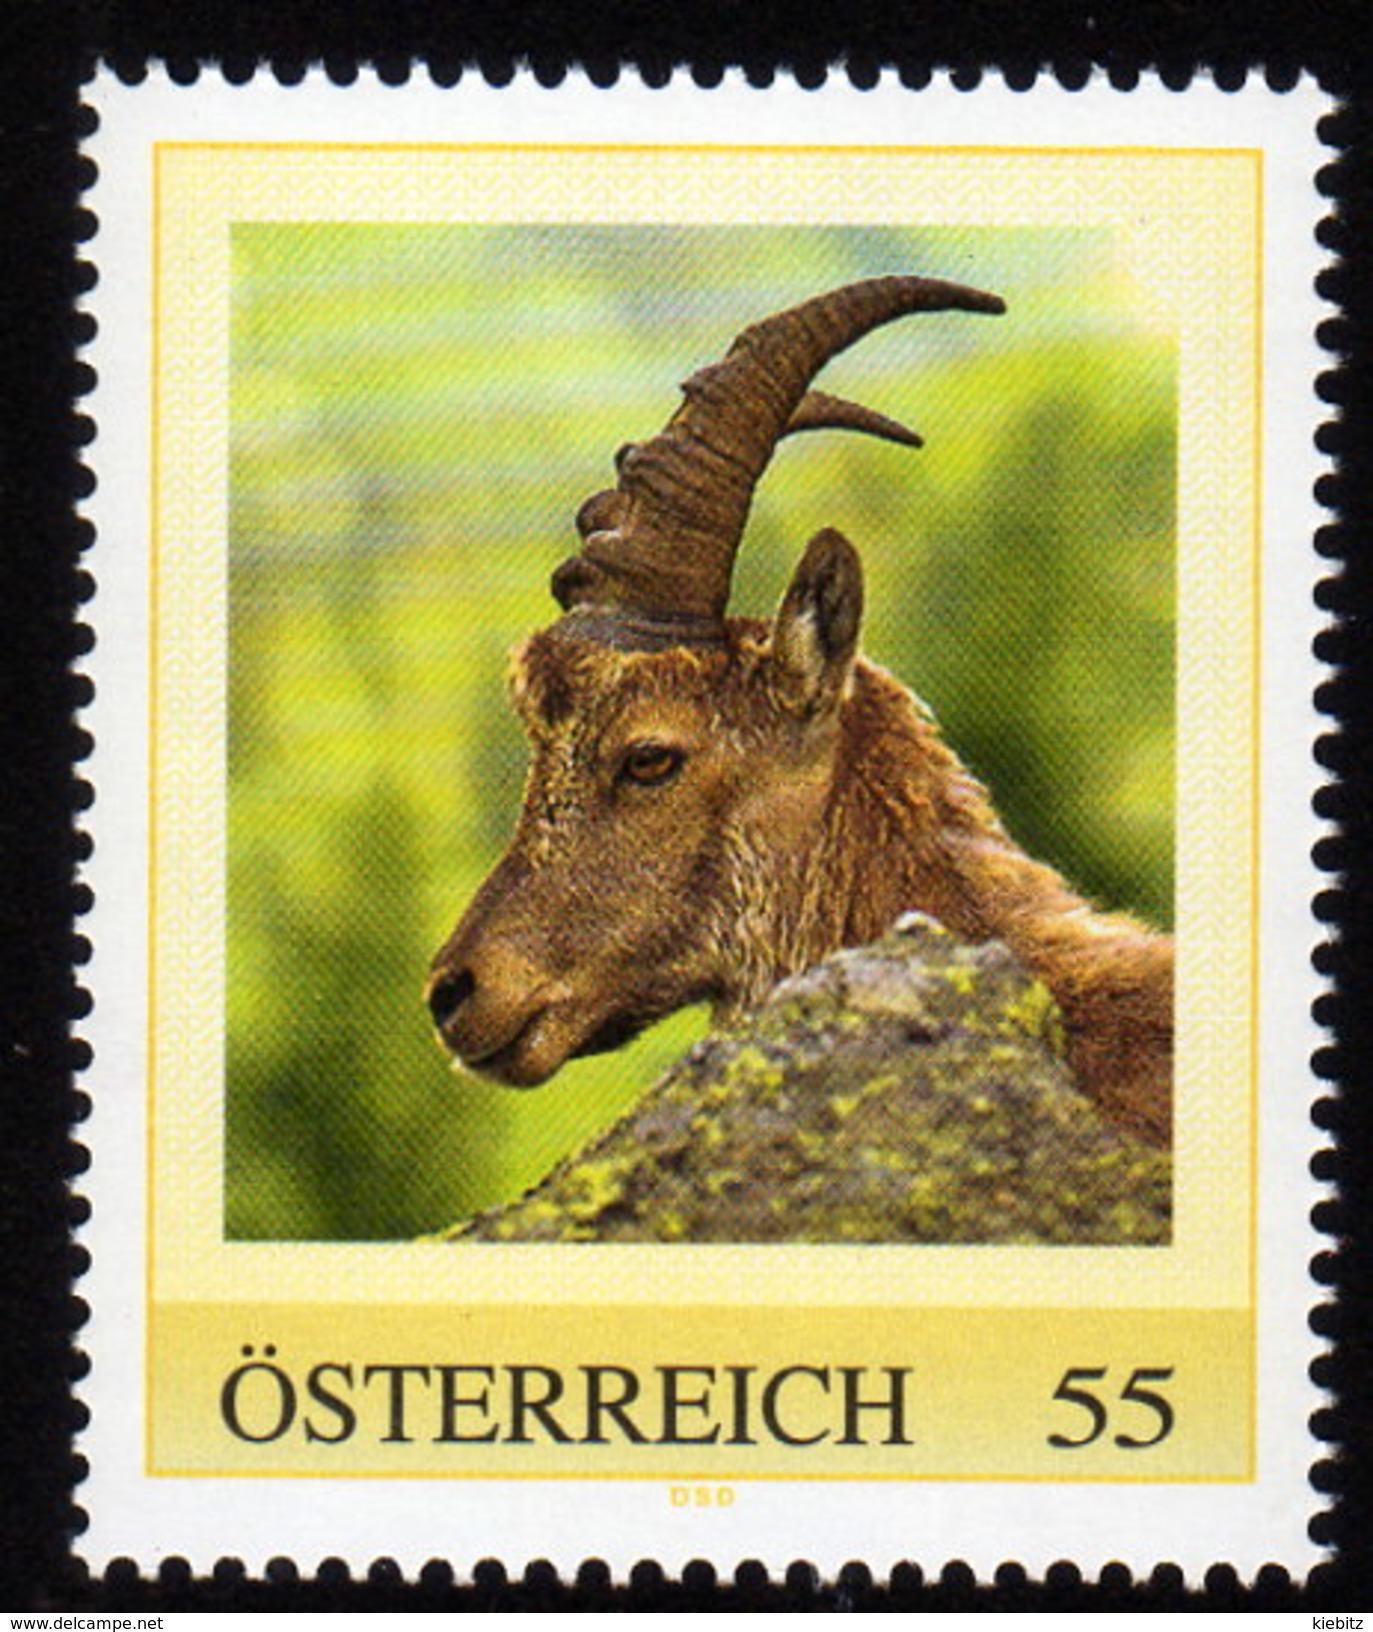 ÖSTERREICH 2010 ** Steinbock, Capra Ibex - PM Personalized Stamp MNH - Wild